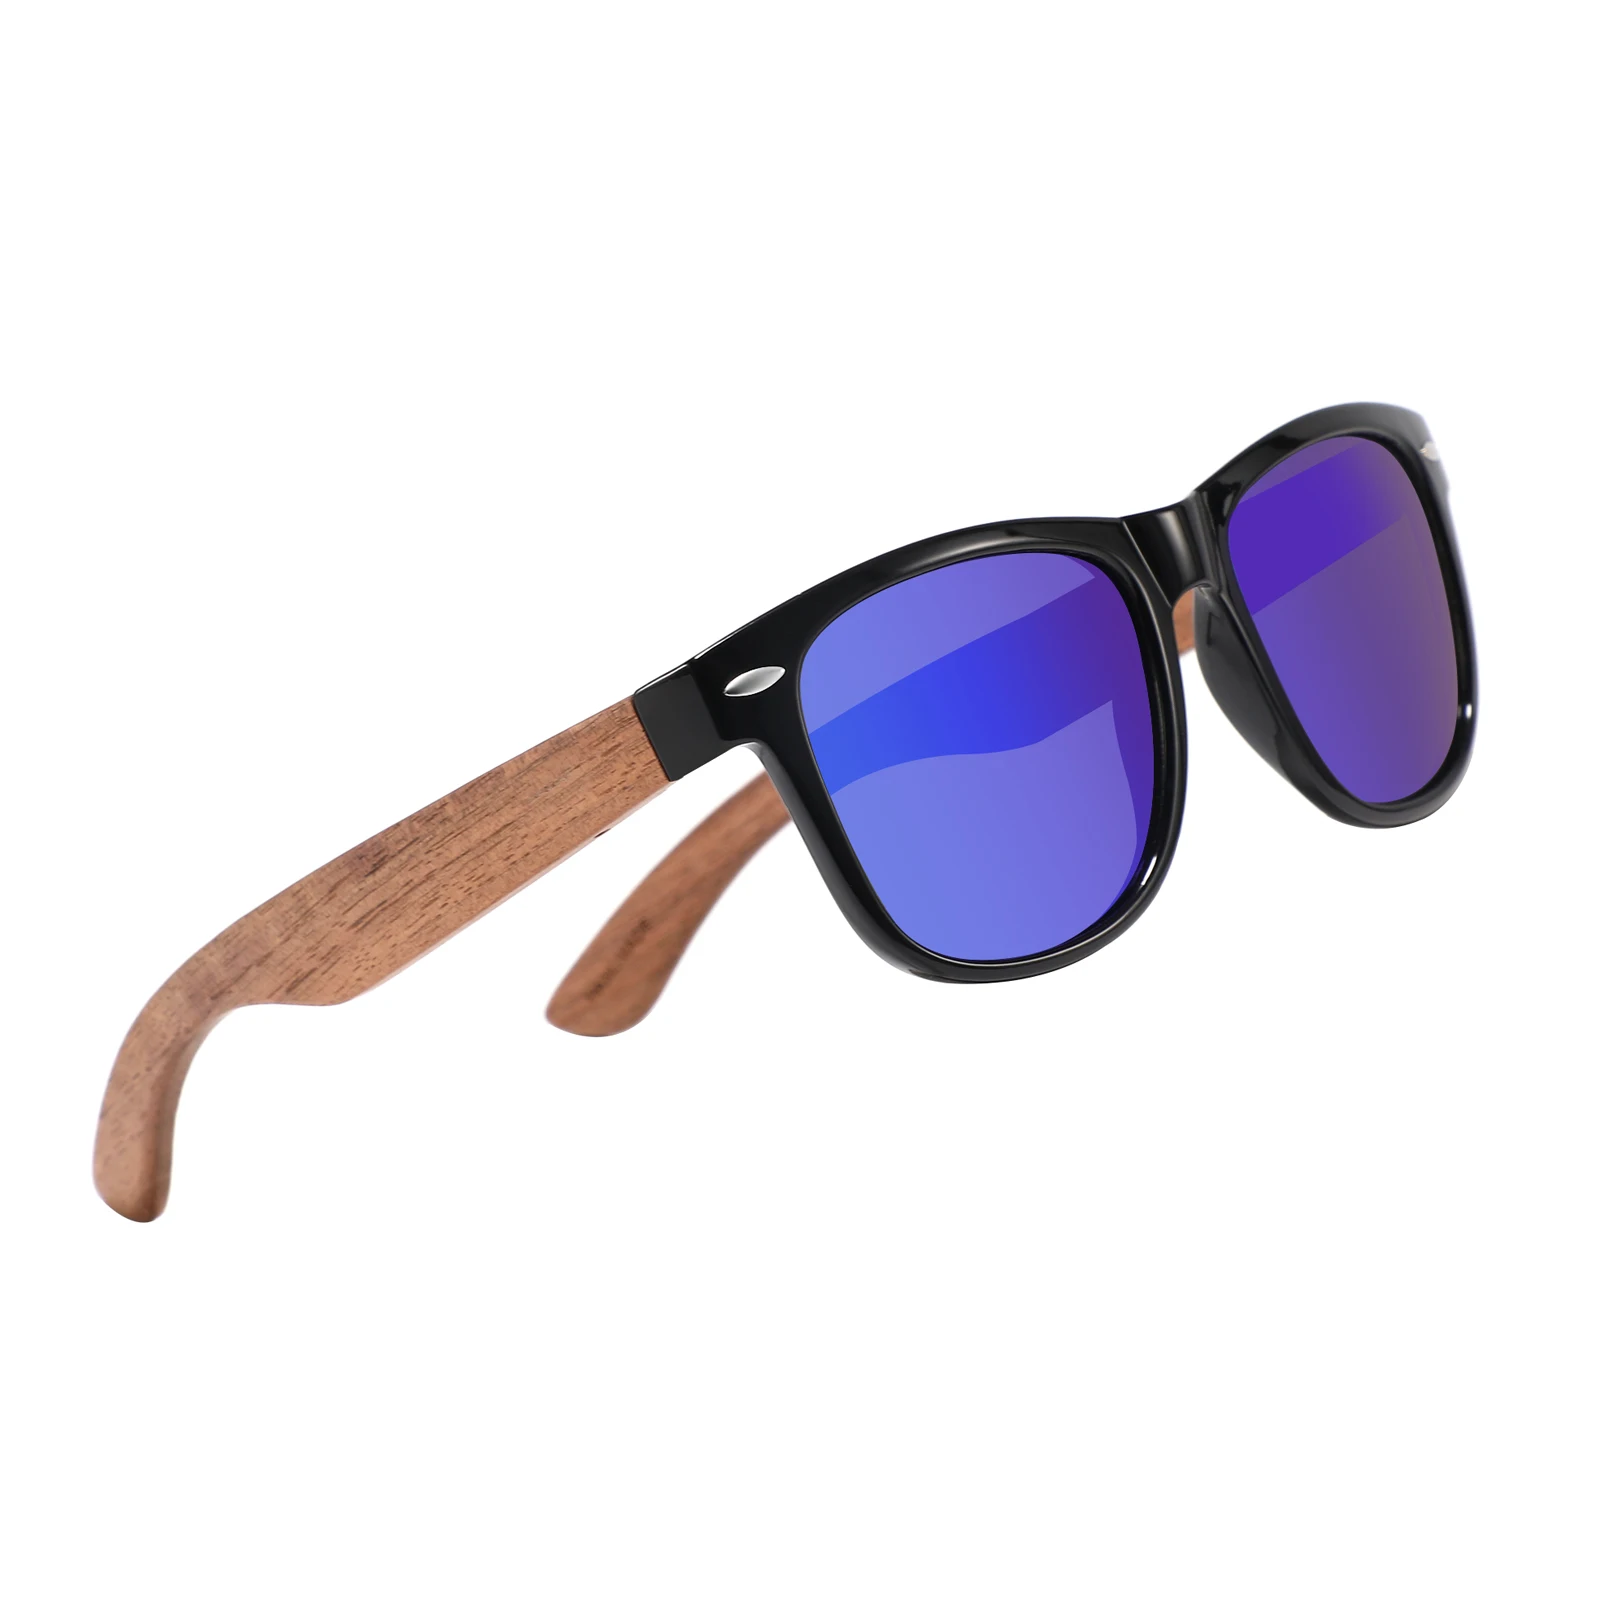 

Wood Sunglasses Mens Polarized Trendy Shade Women Bamboo Sunglasses 2021 2020, Mix color